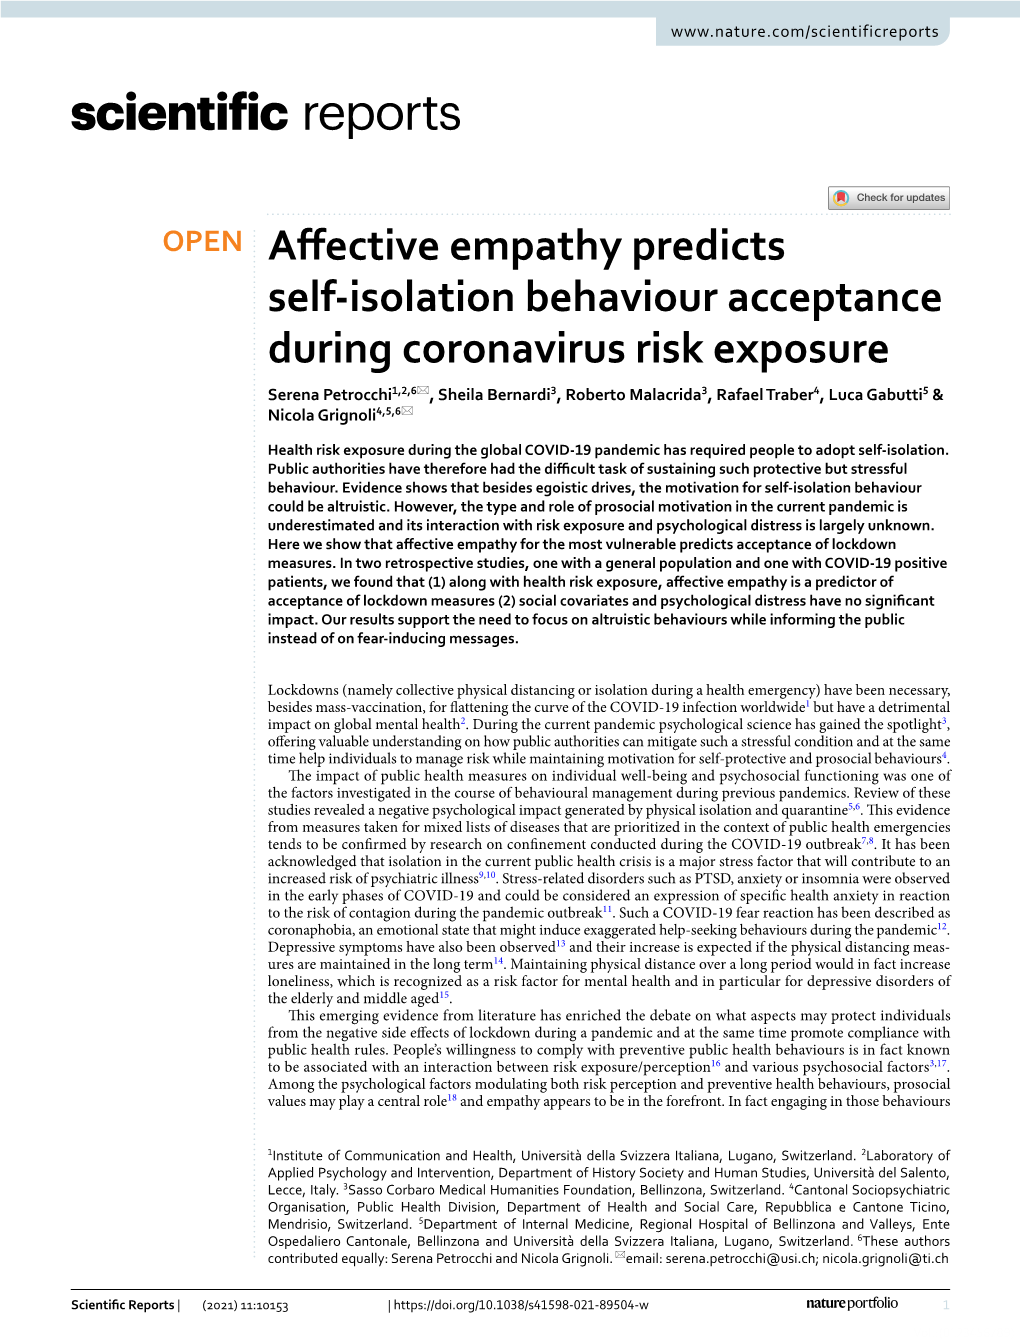 Affective Empathy Predicts Self-Isolation Behaviour Acceptance